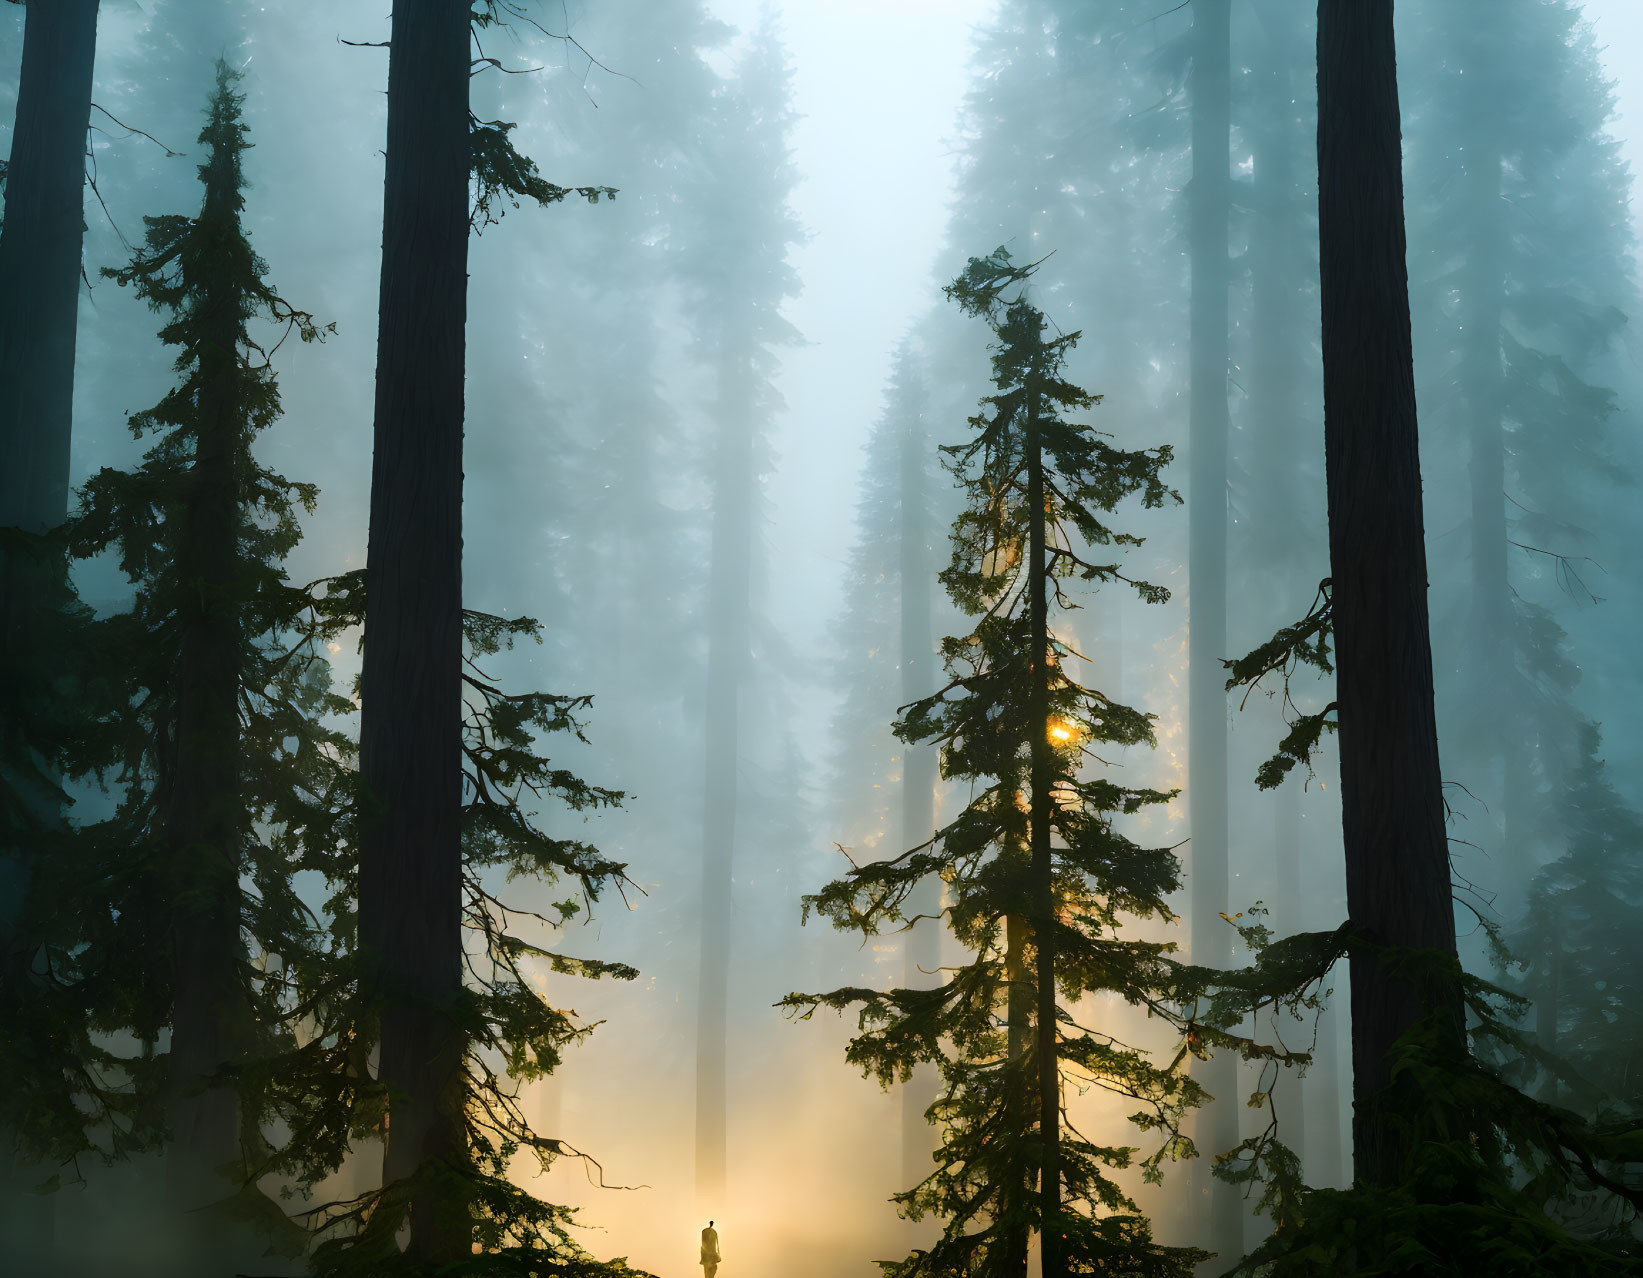 Sunbeams filtering through misty forest, creating serene atmosphere